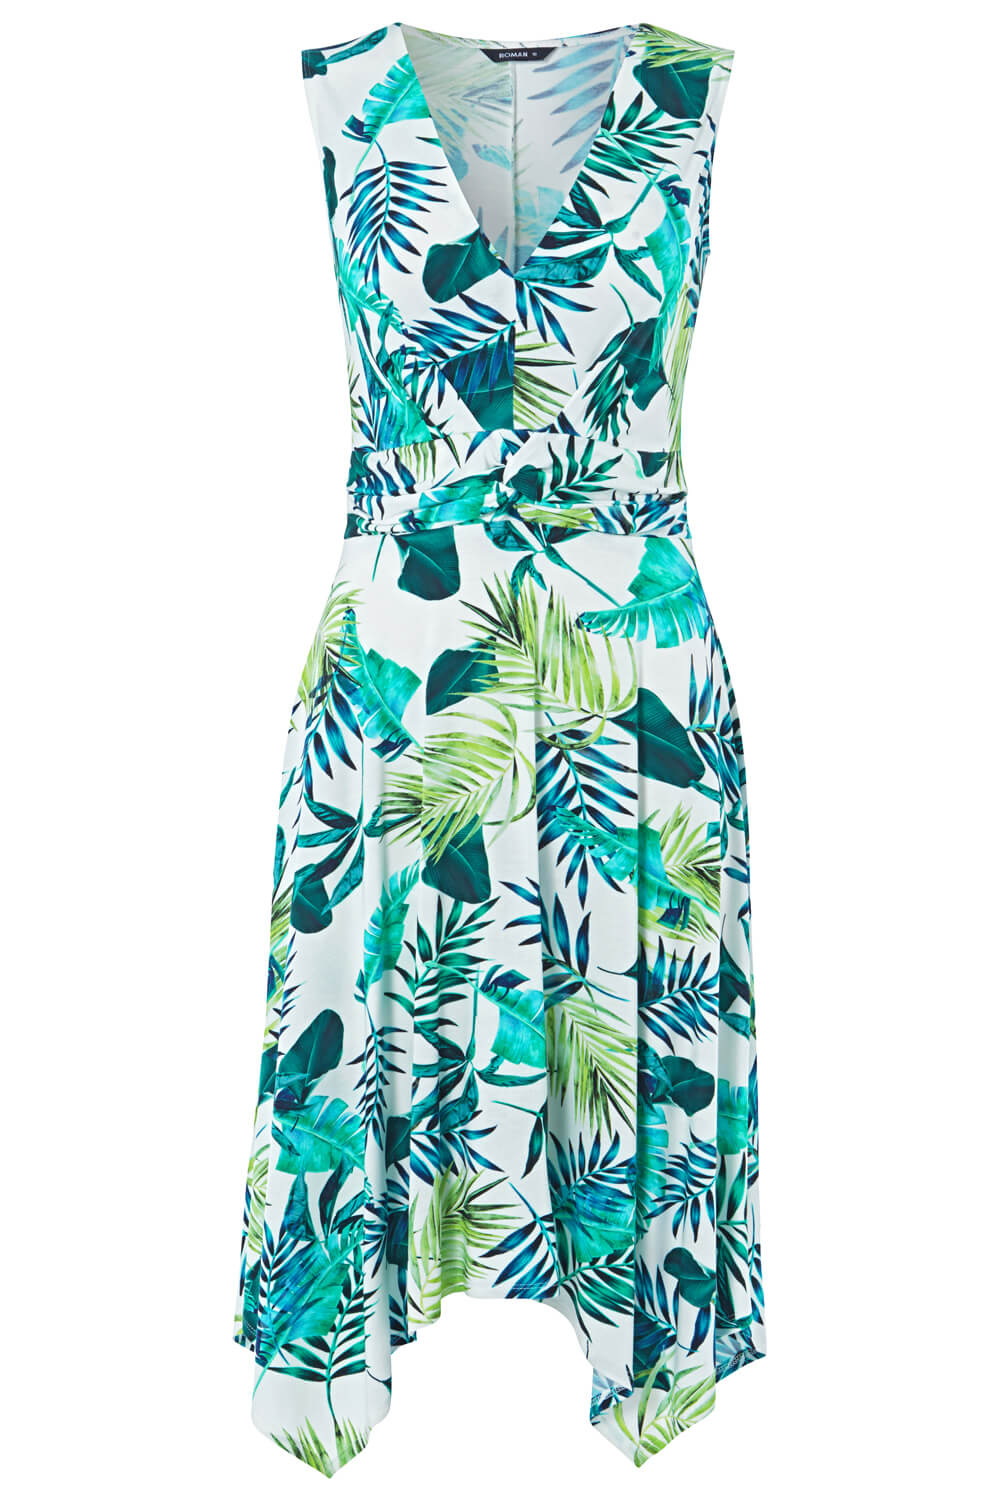 Green Palm Print Twist Front Dress, Image 5 of 5